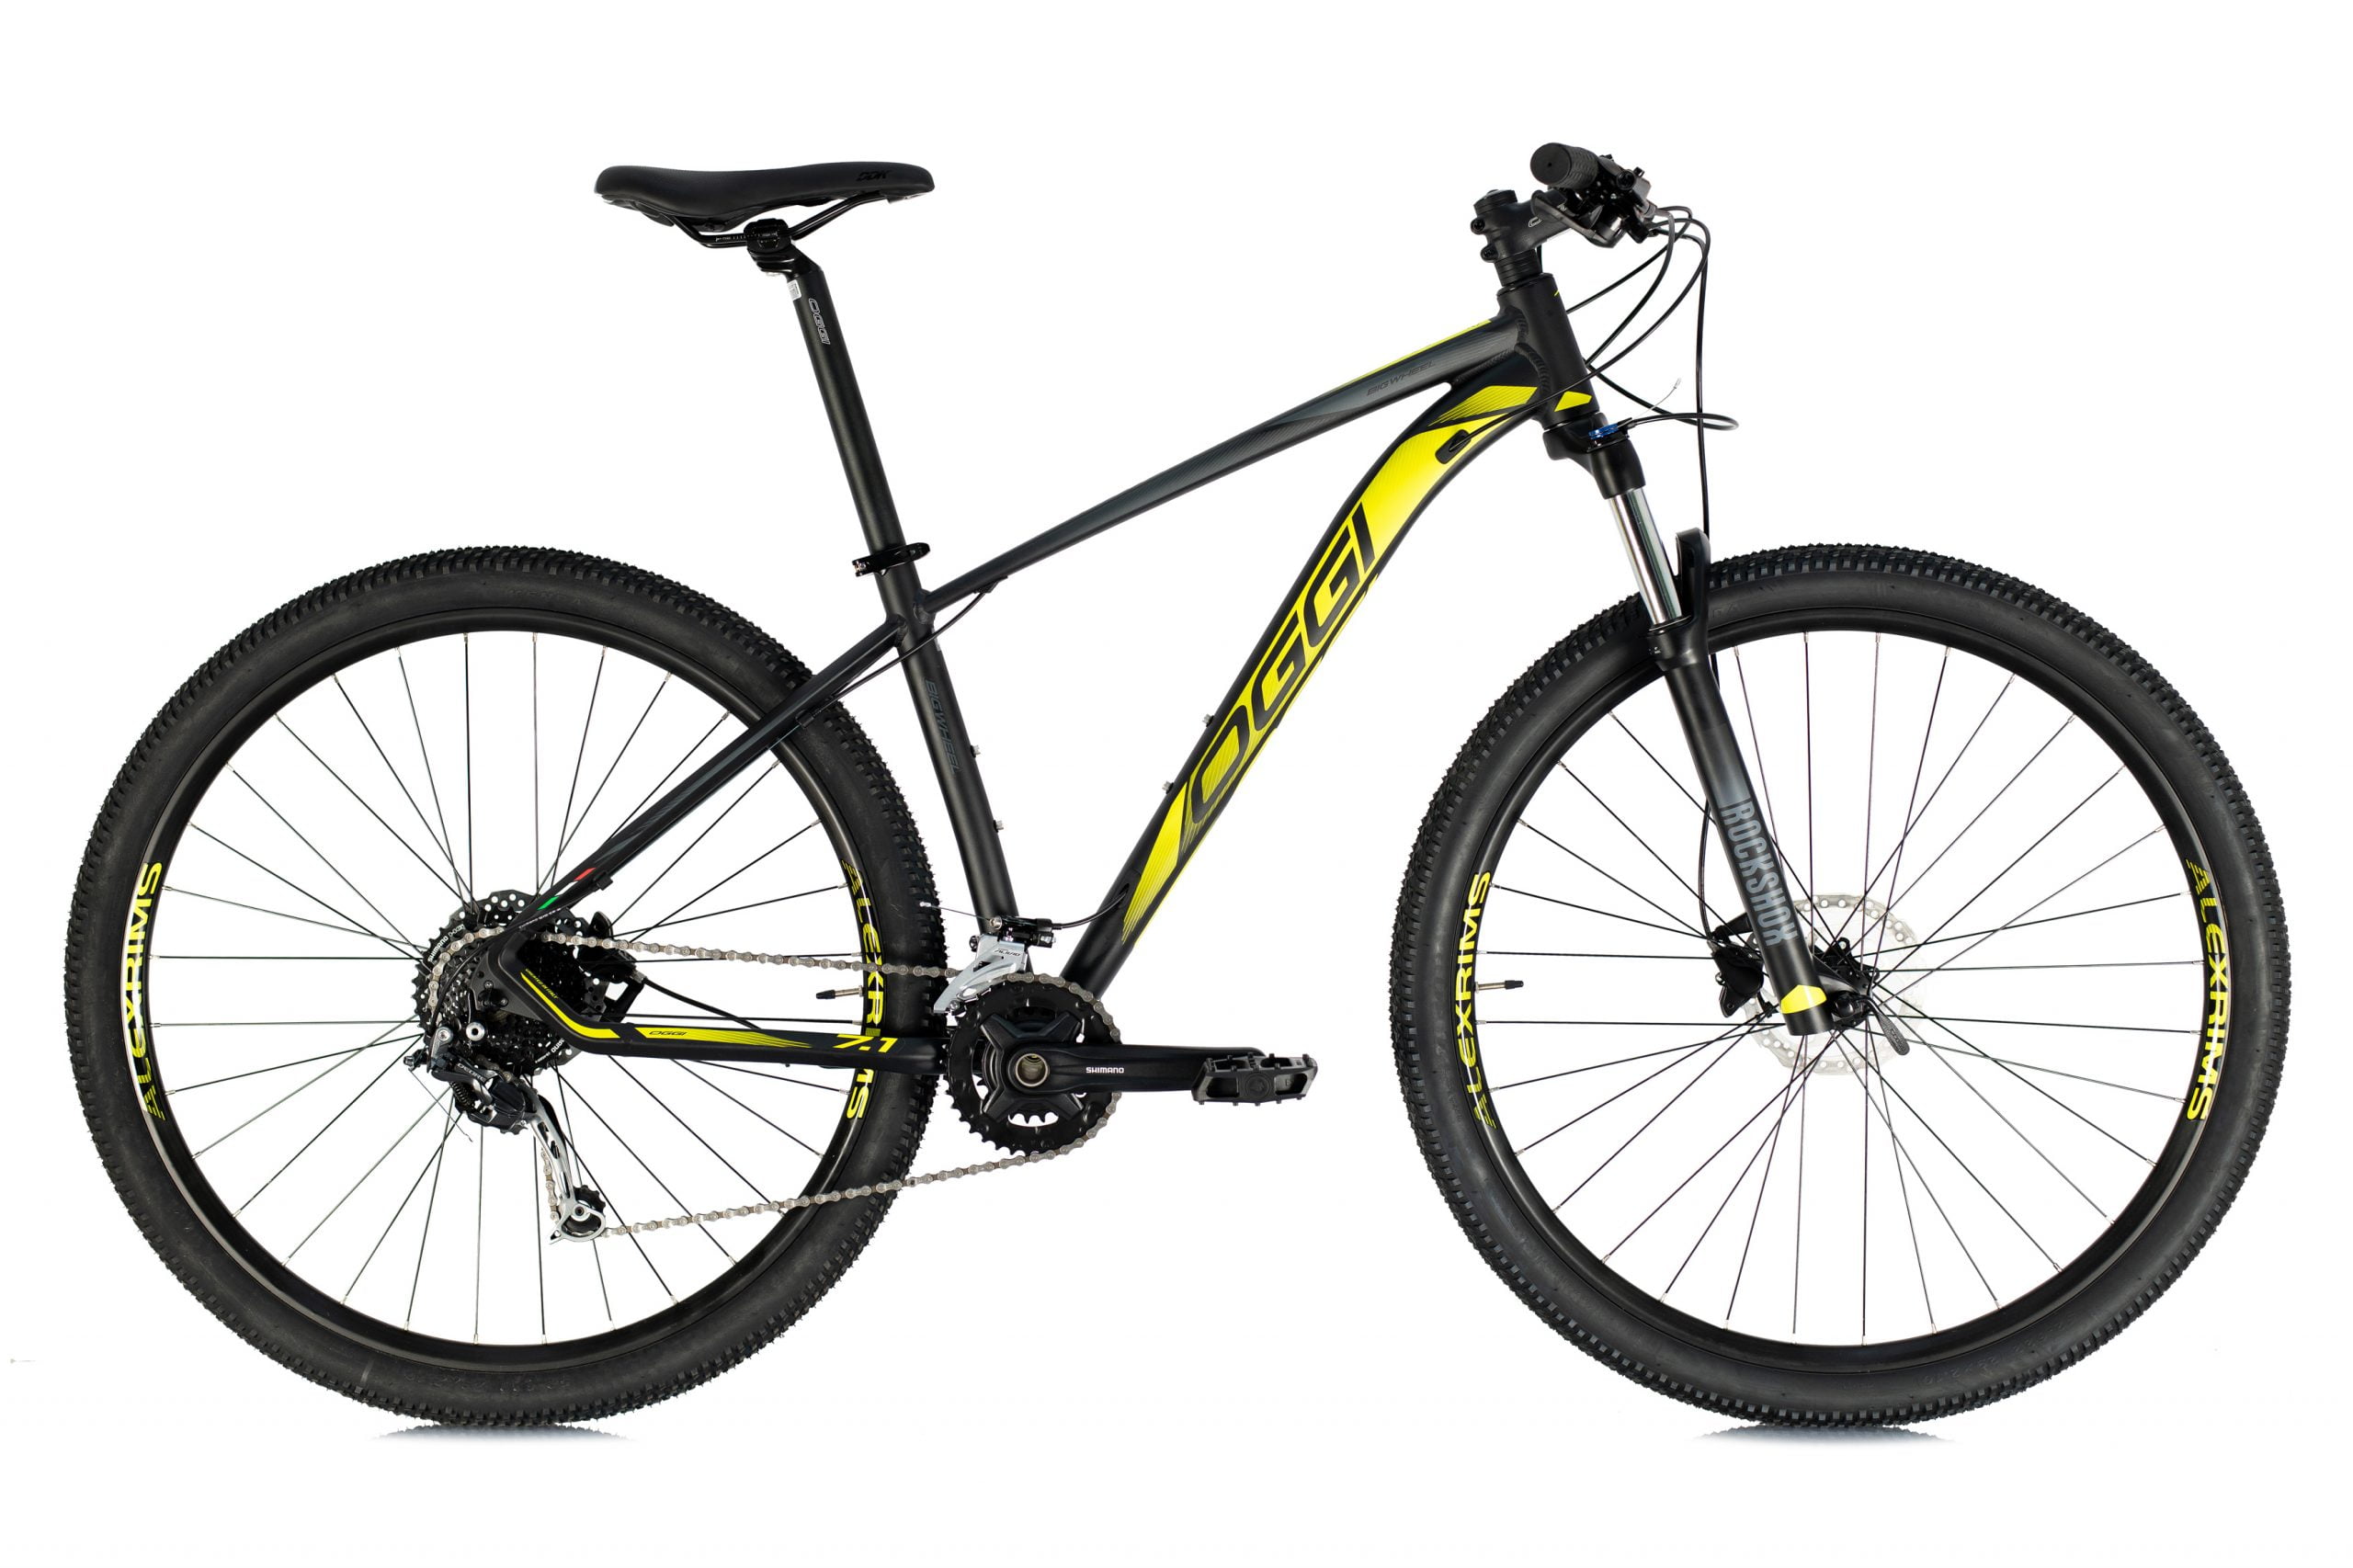 Bicicleta Oggi Big Wheel 7.1 2021 Preto/Amarelo Aro 29, 18v